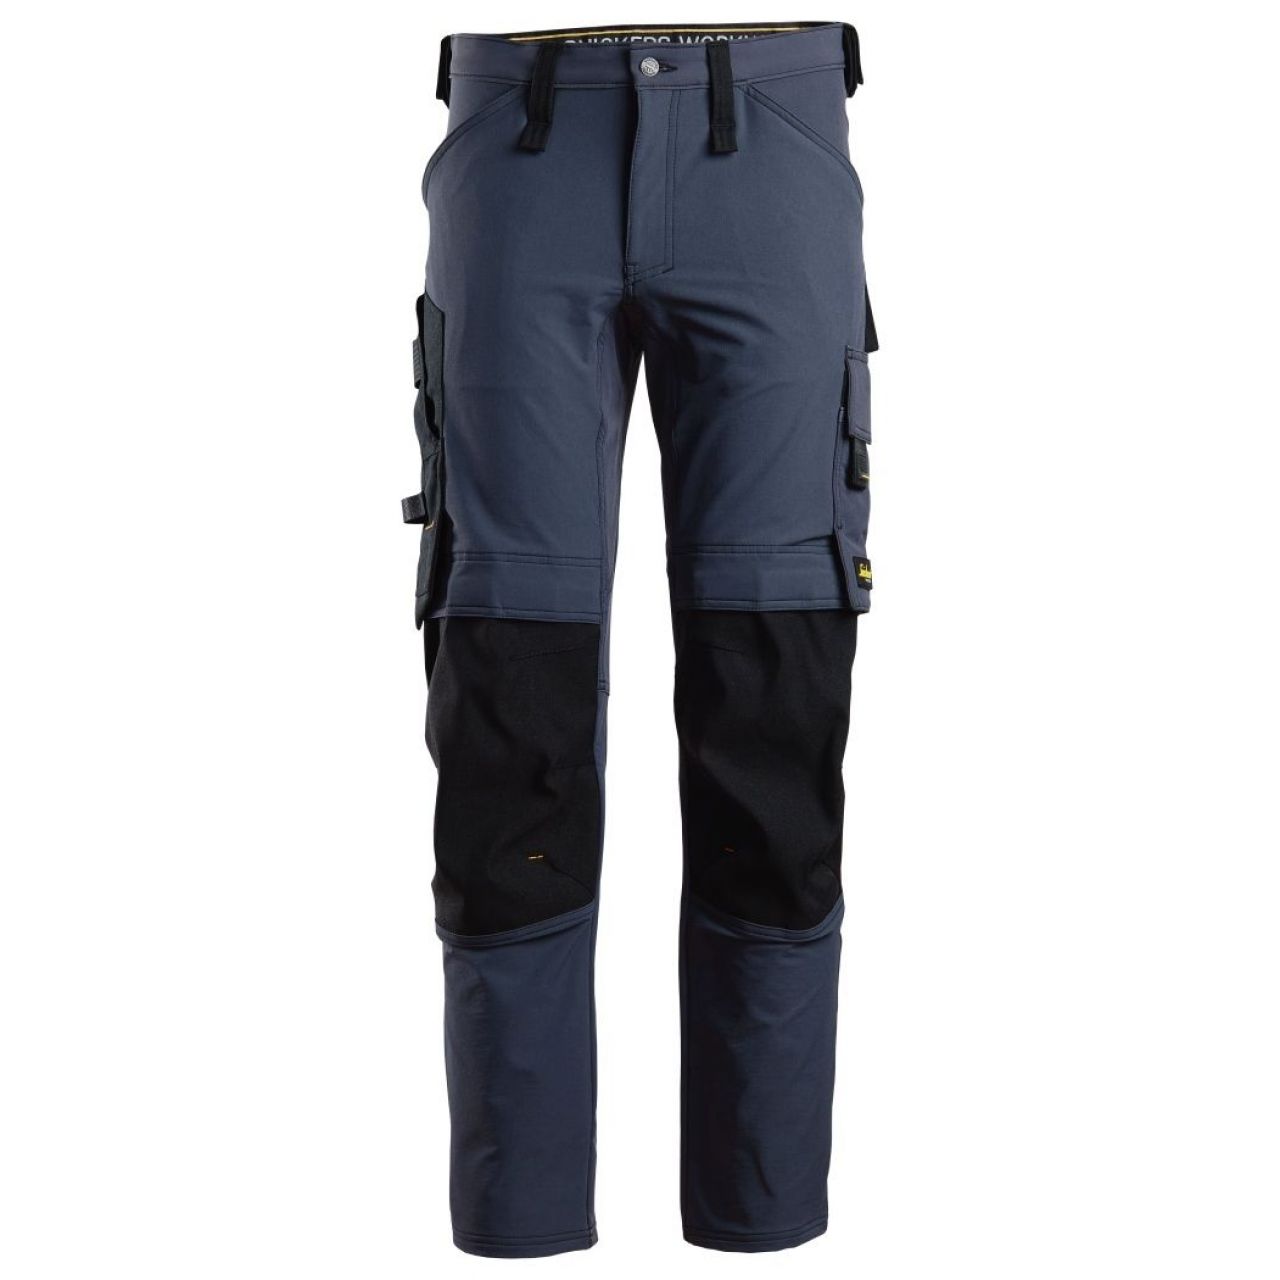 Pantalon elastico AllroundWork azul marino-negro talla 148